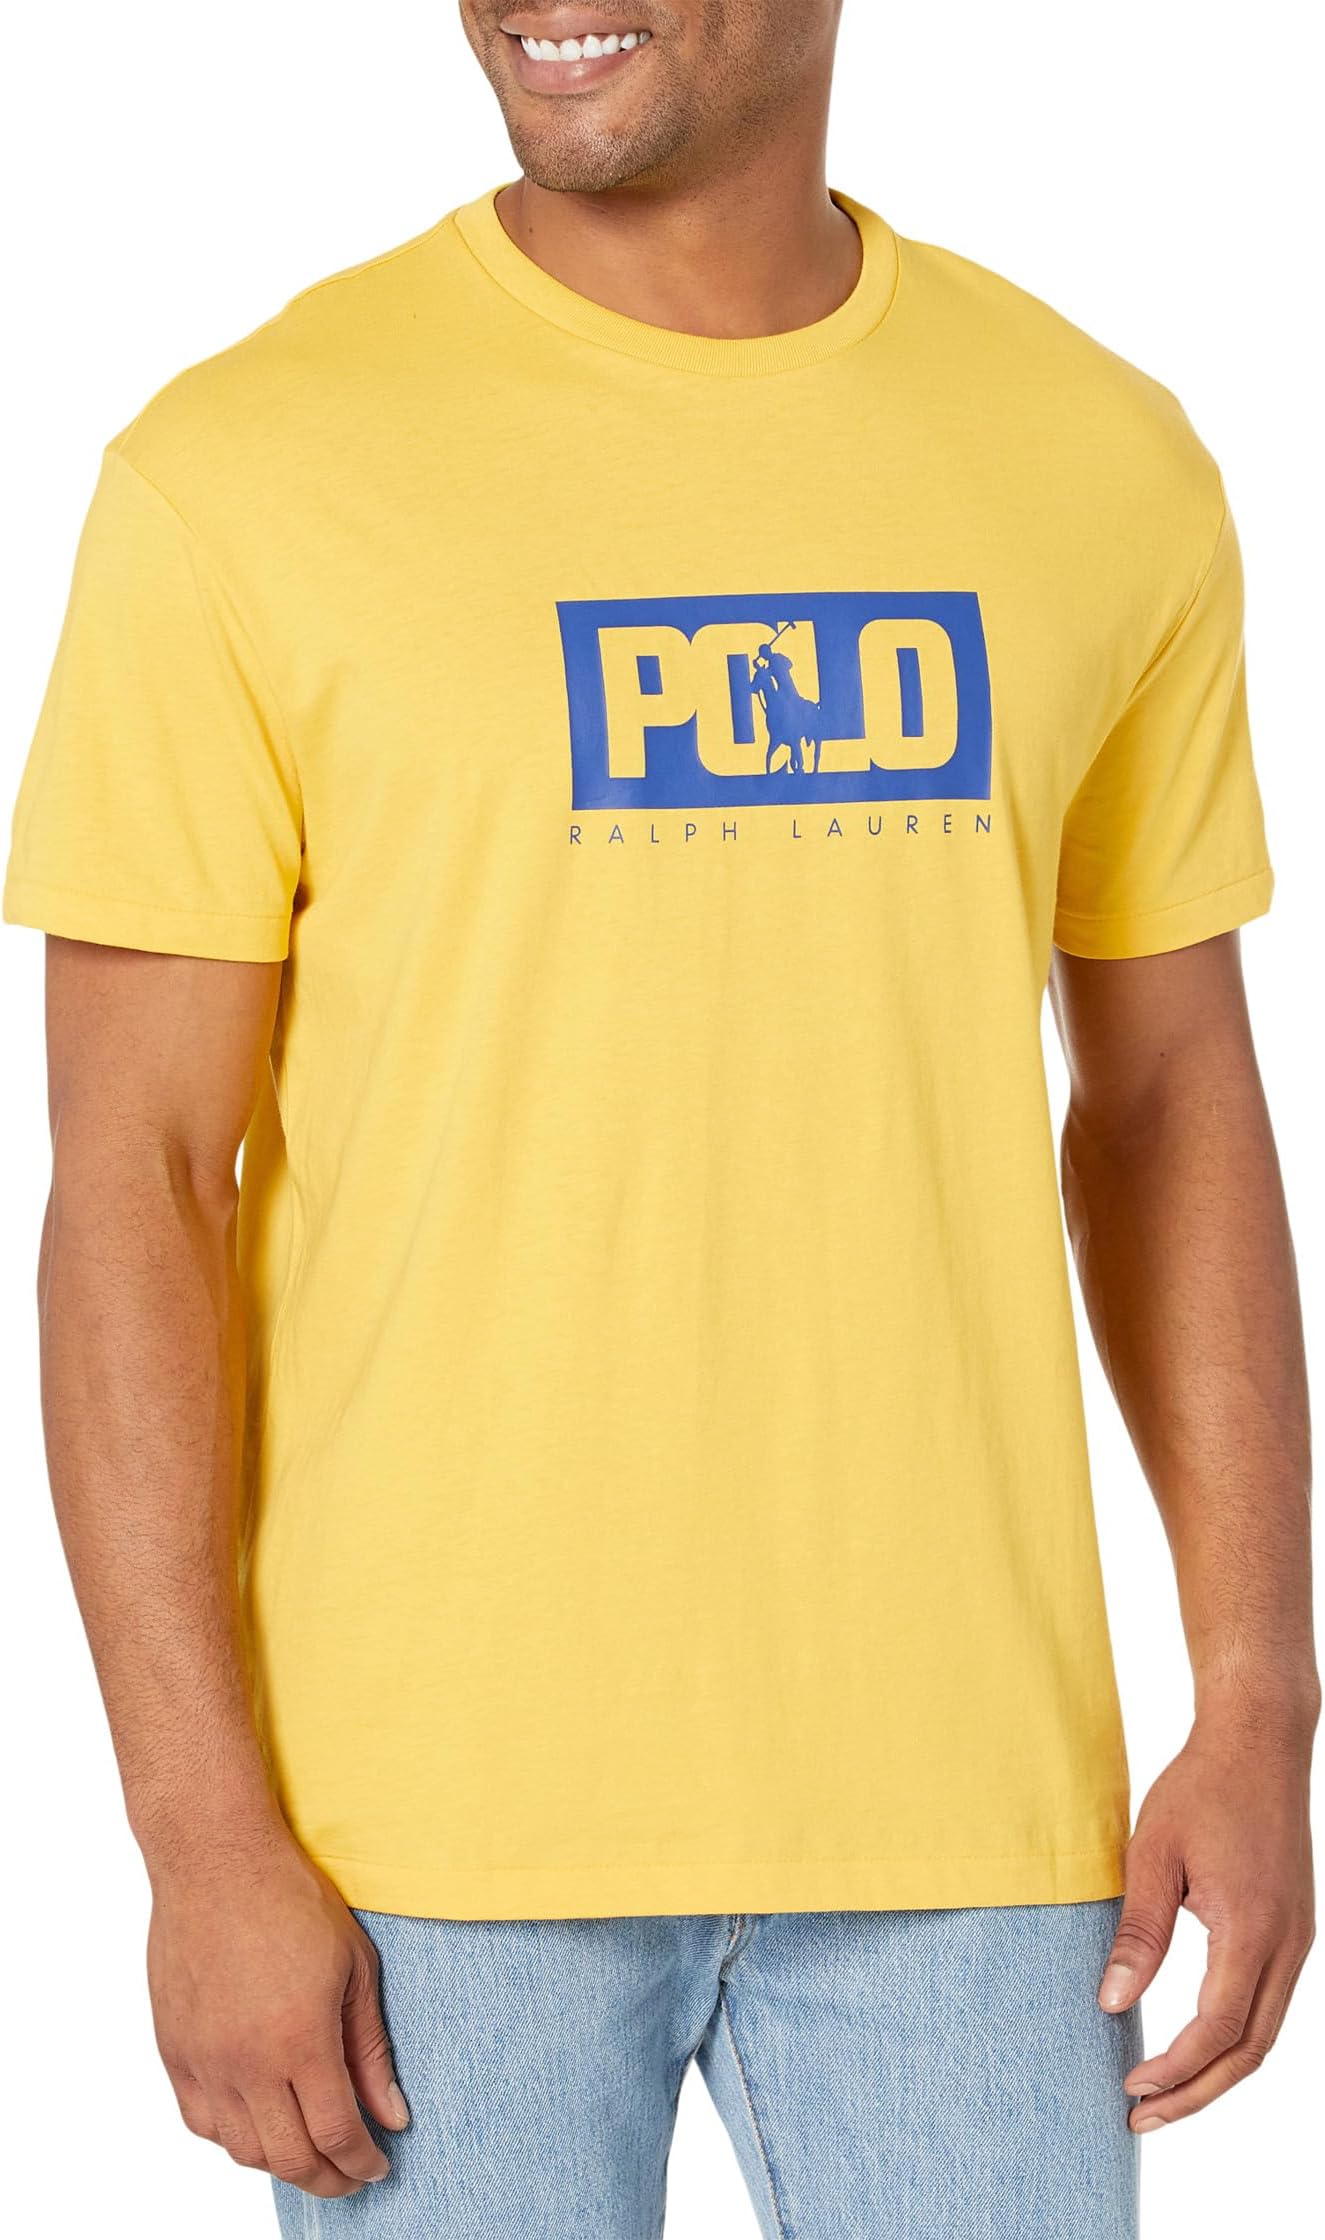 Классическая футболка из джерси с логотипом Polo Ralph Lauren, цвет Canary Yellow поло brax polo цвет canary